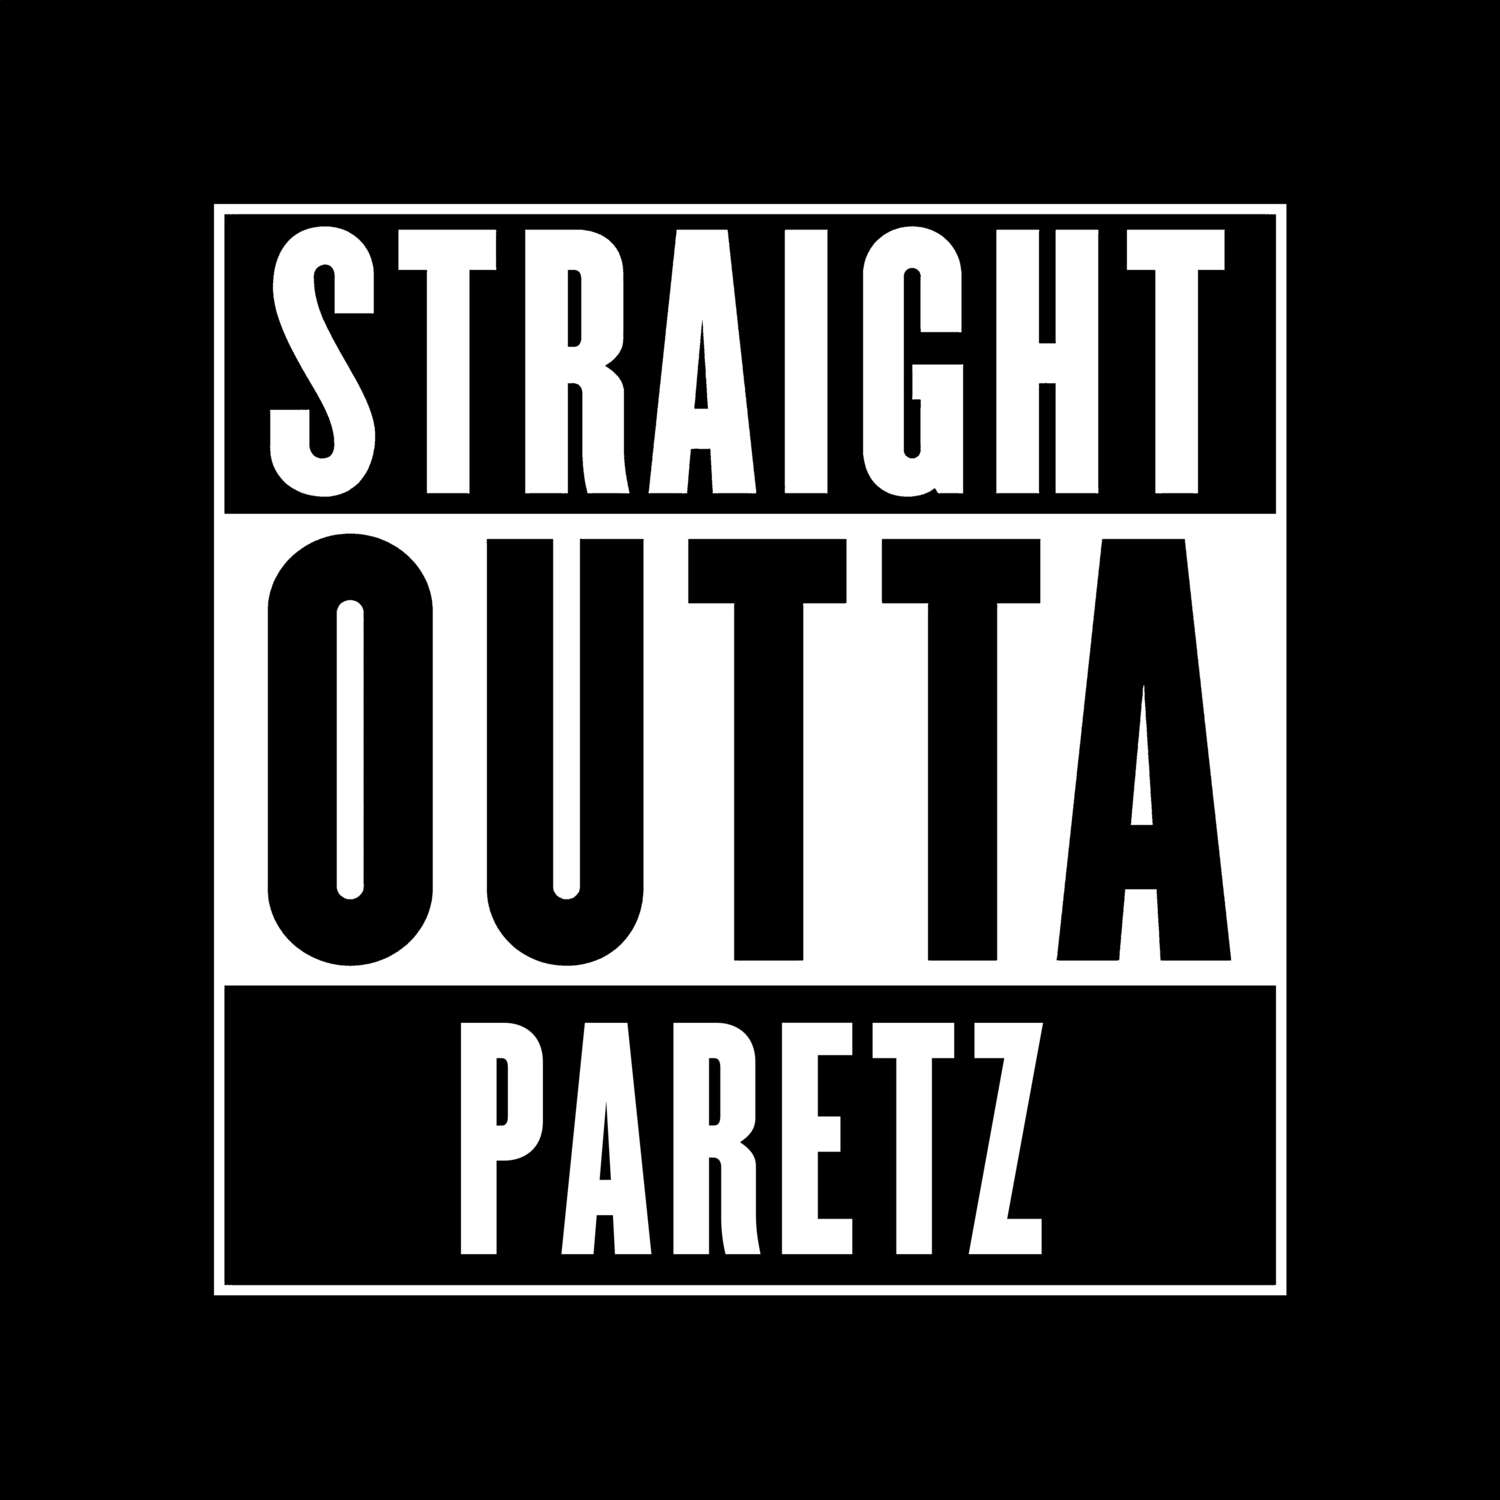 Paretz T-Shirt »Straight Outta«